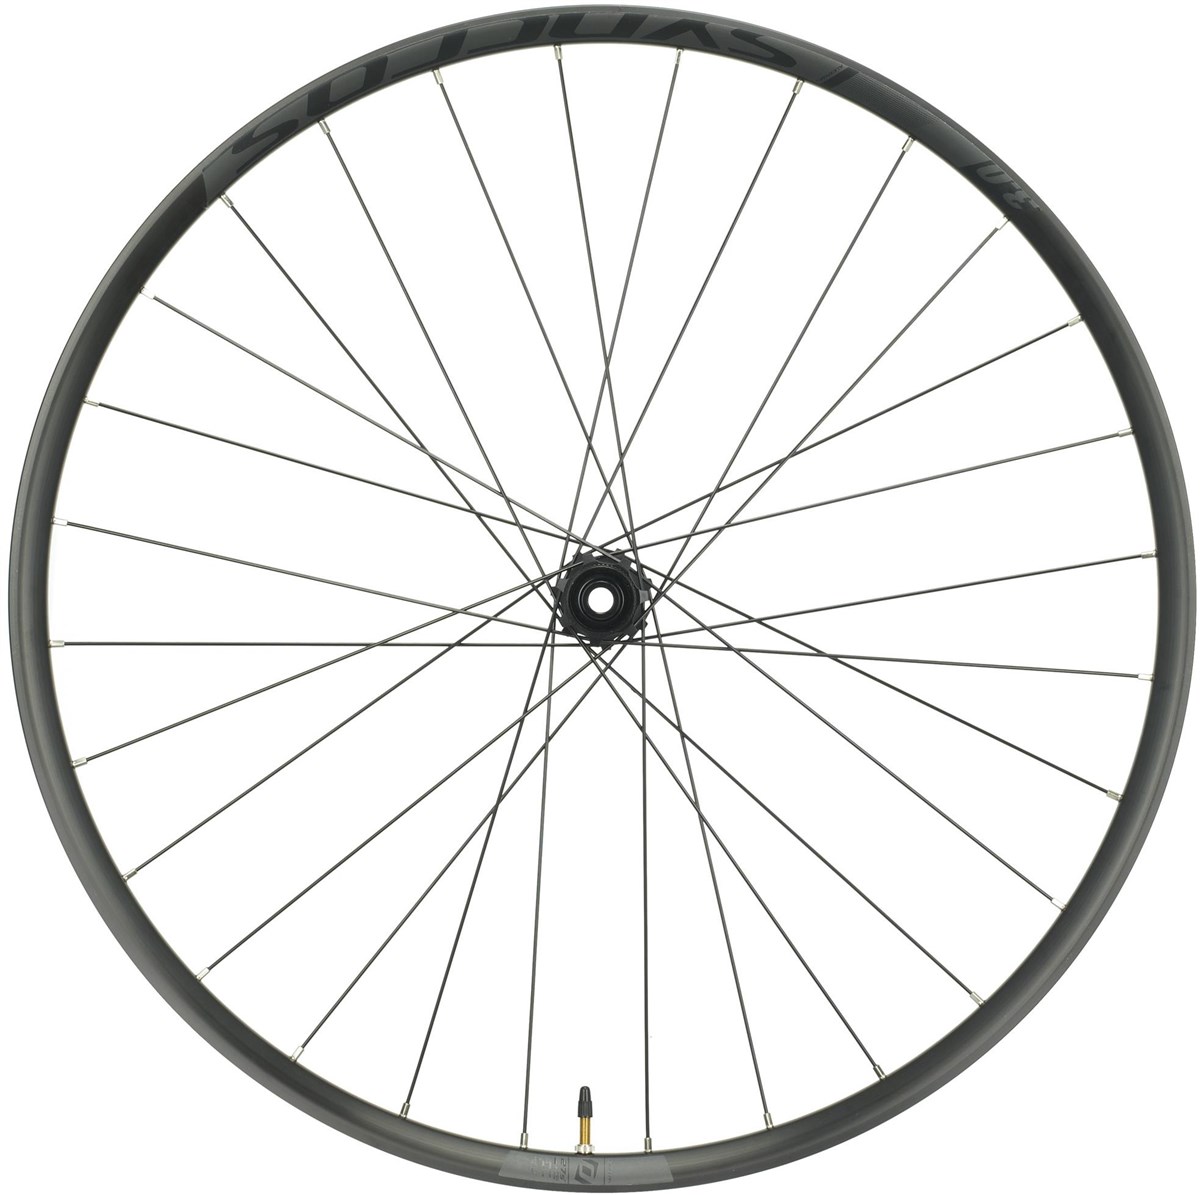 Syncros 3.0 29" MTB Wheel